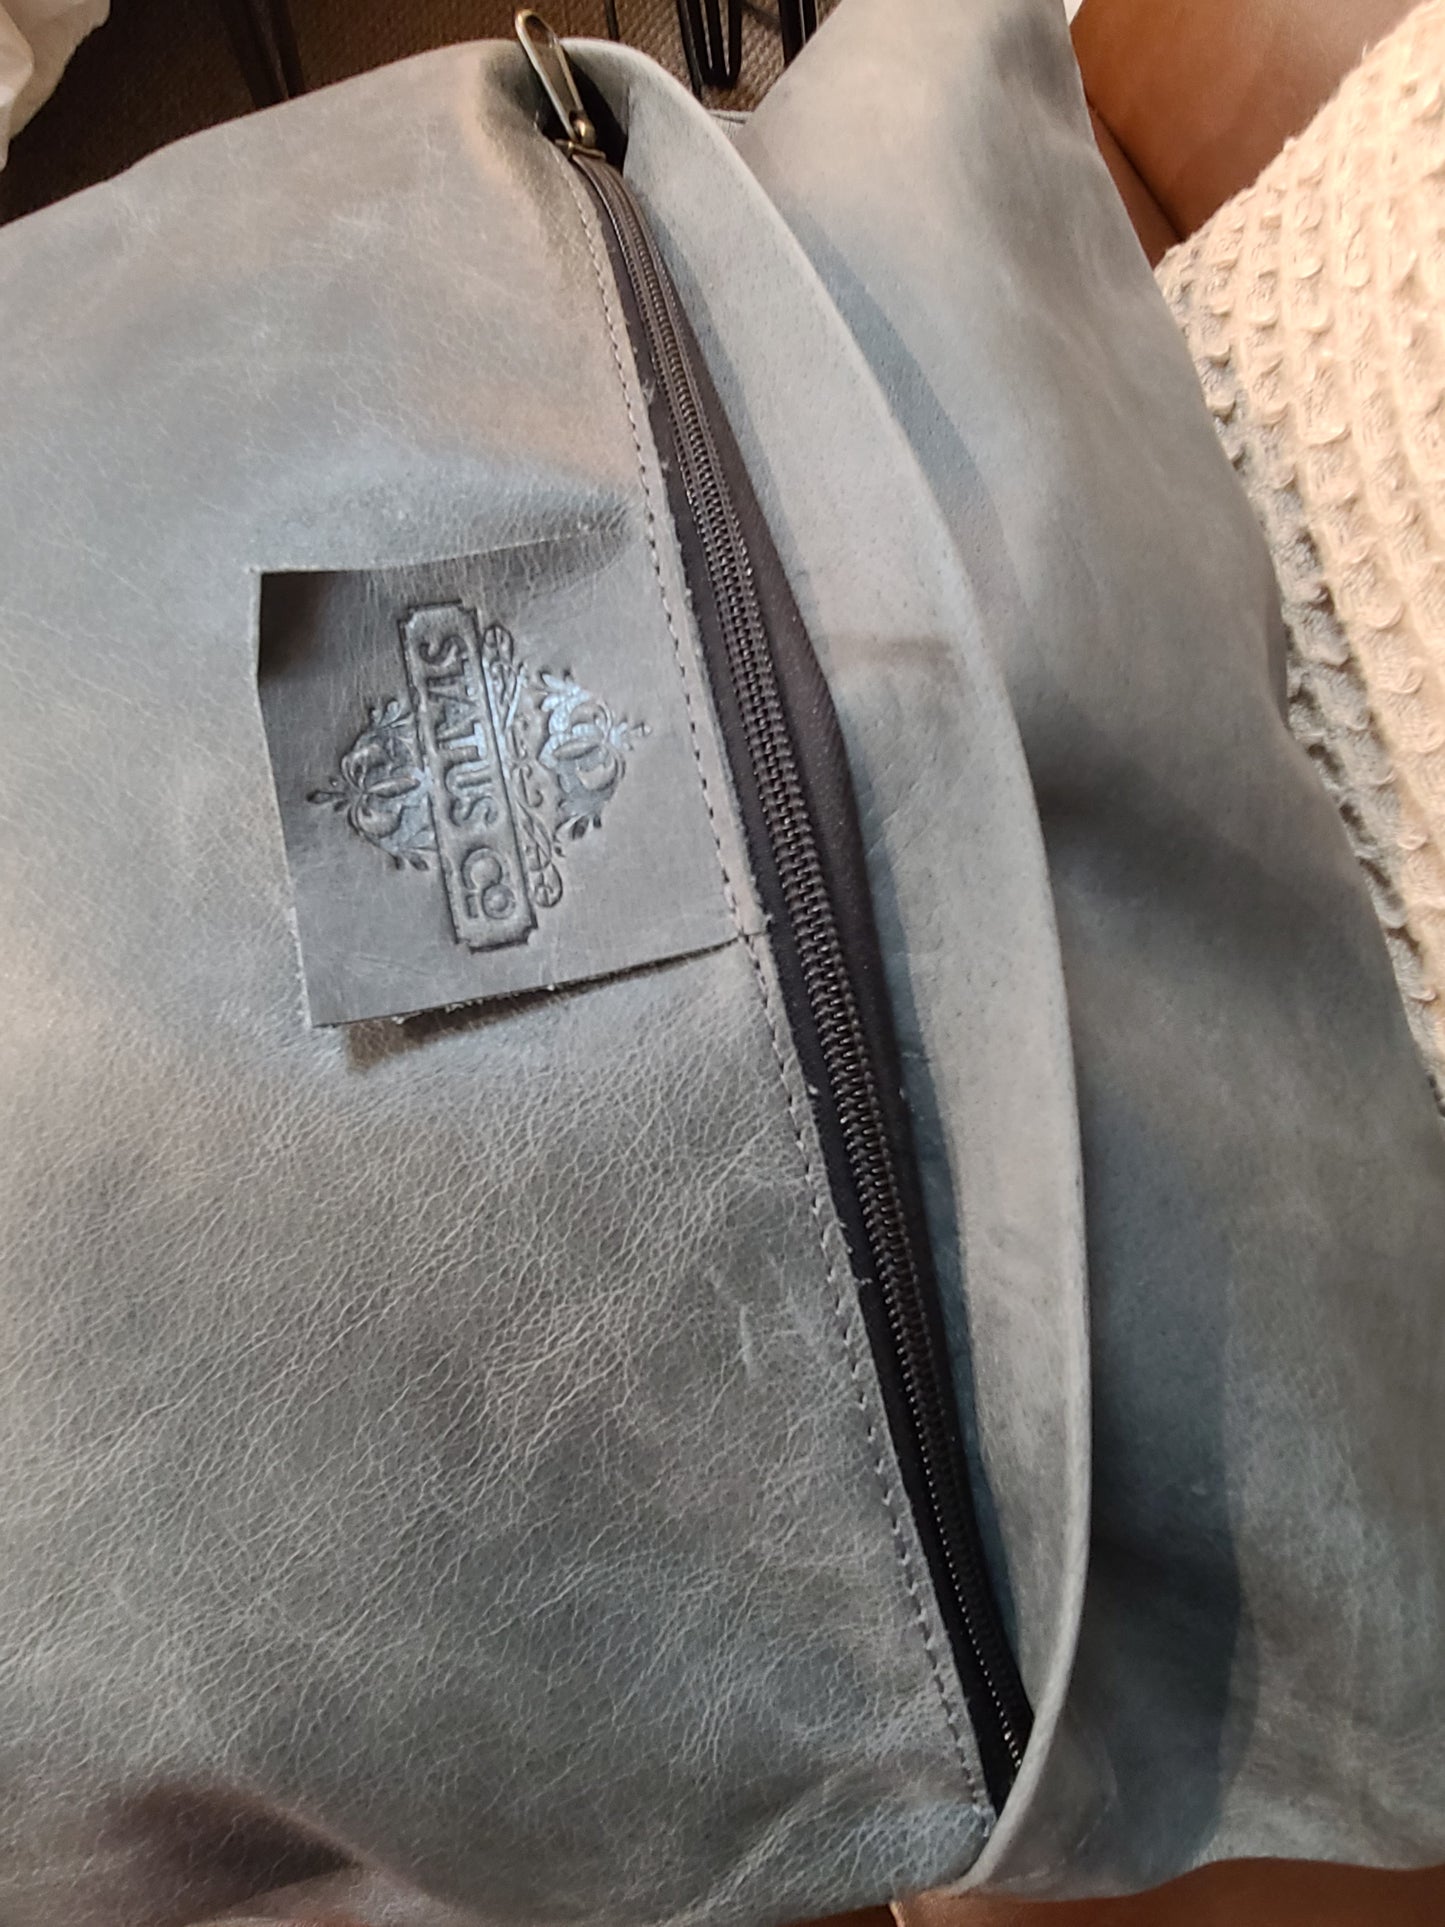 100% Leather Blue Grey Mandala Throw Pillow Cover - 18 x 18-Status Co. Leather Studio